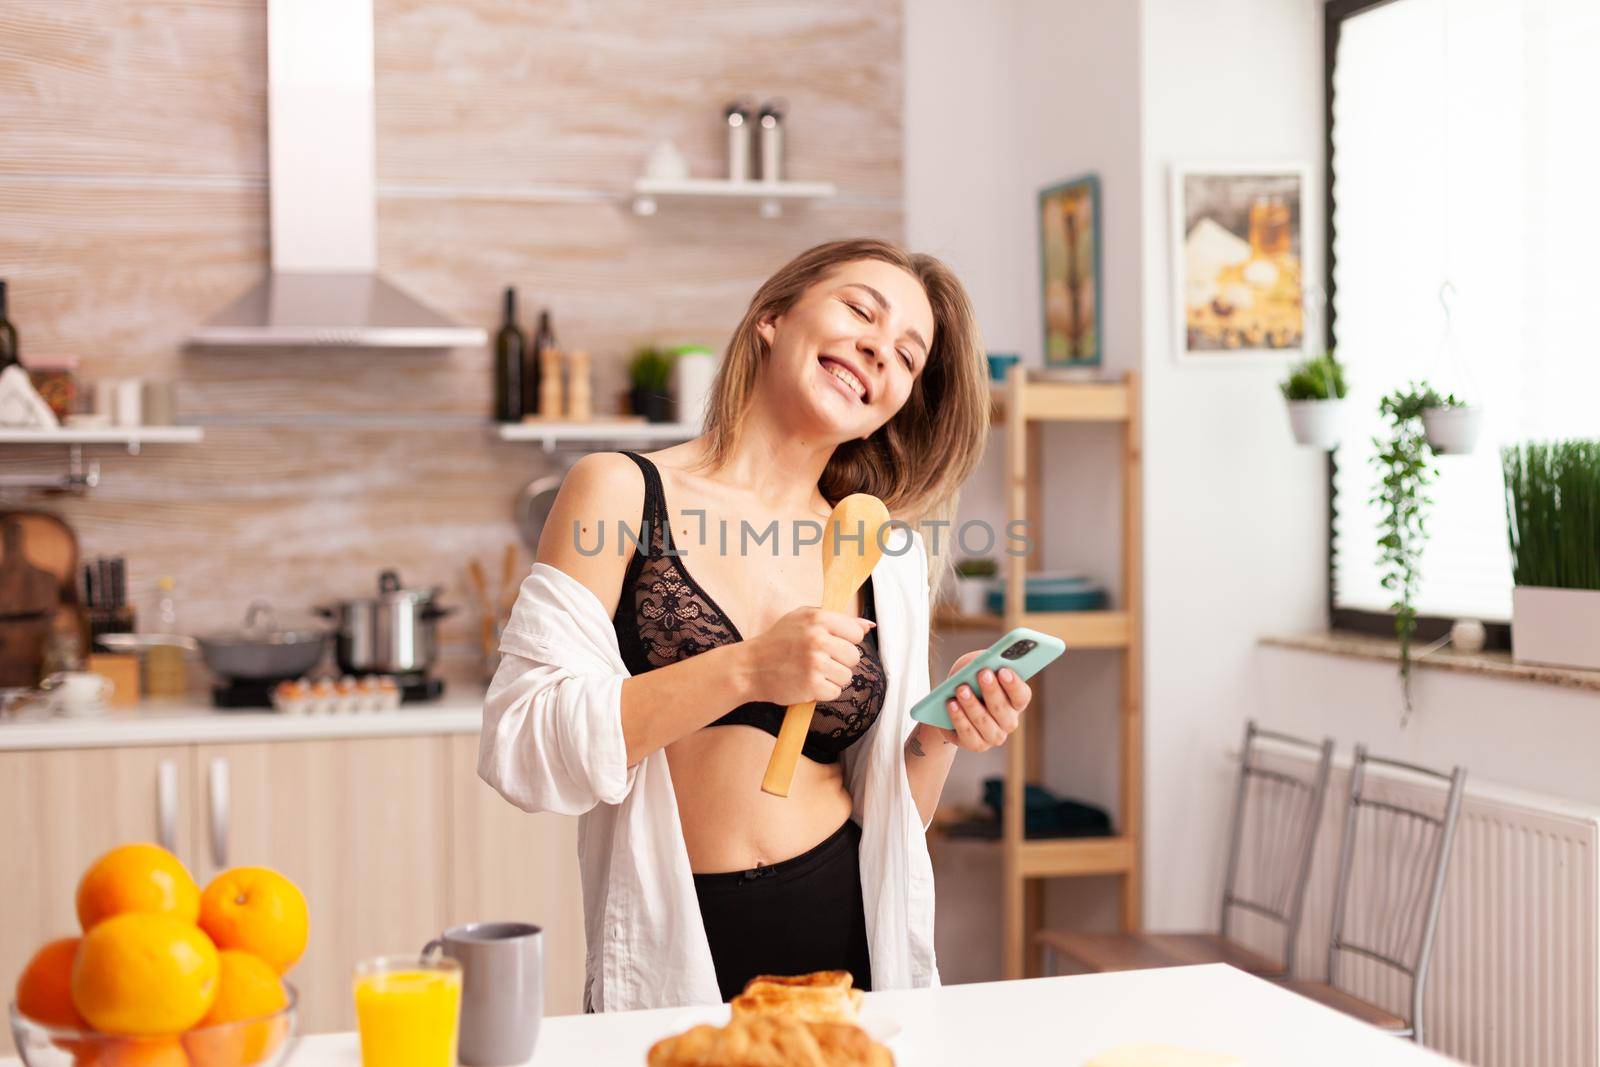 Woman having fun singing in kitchen by DCStudio